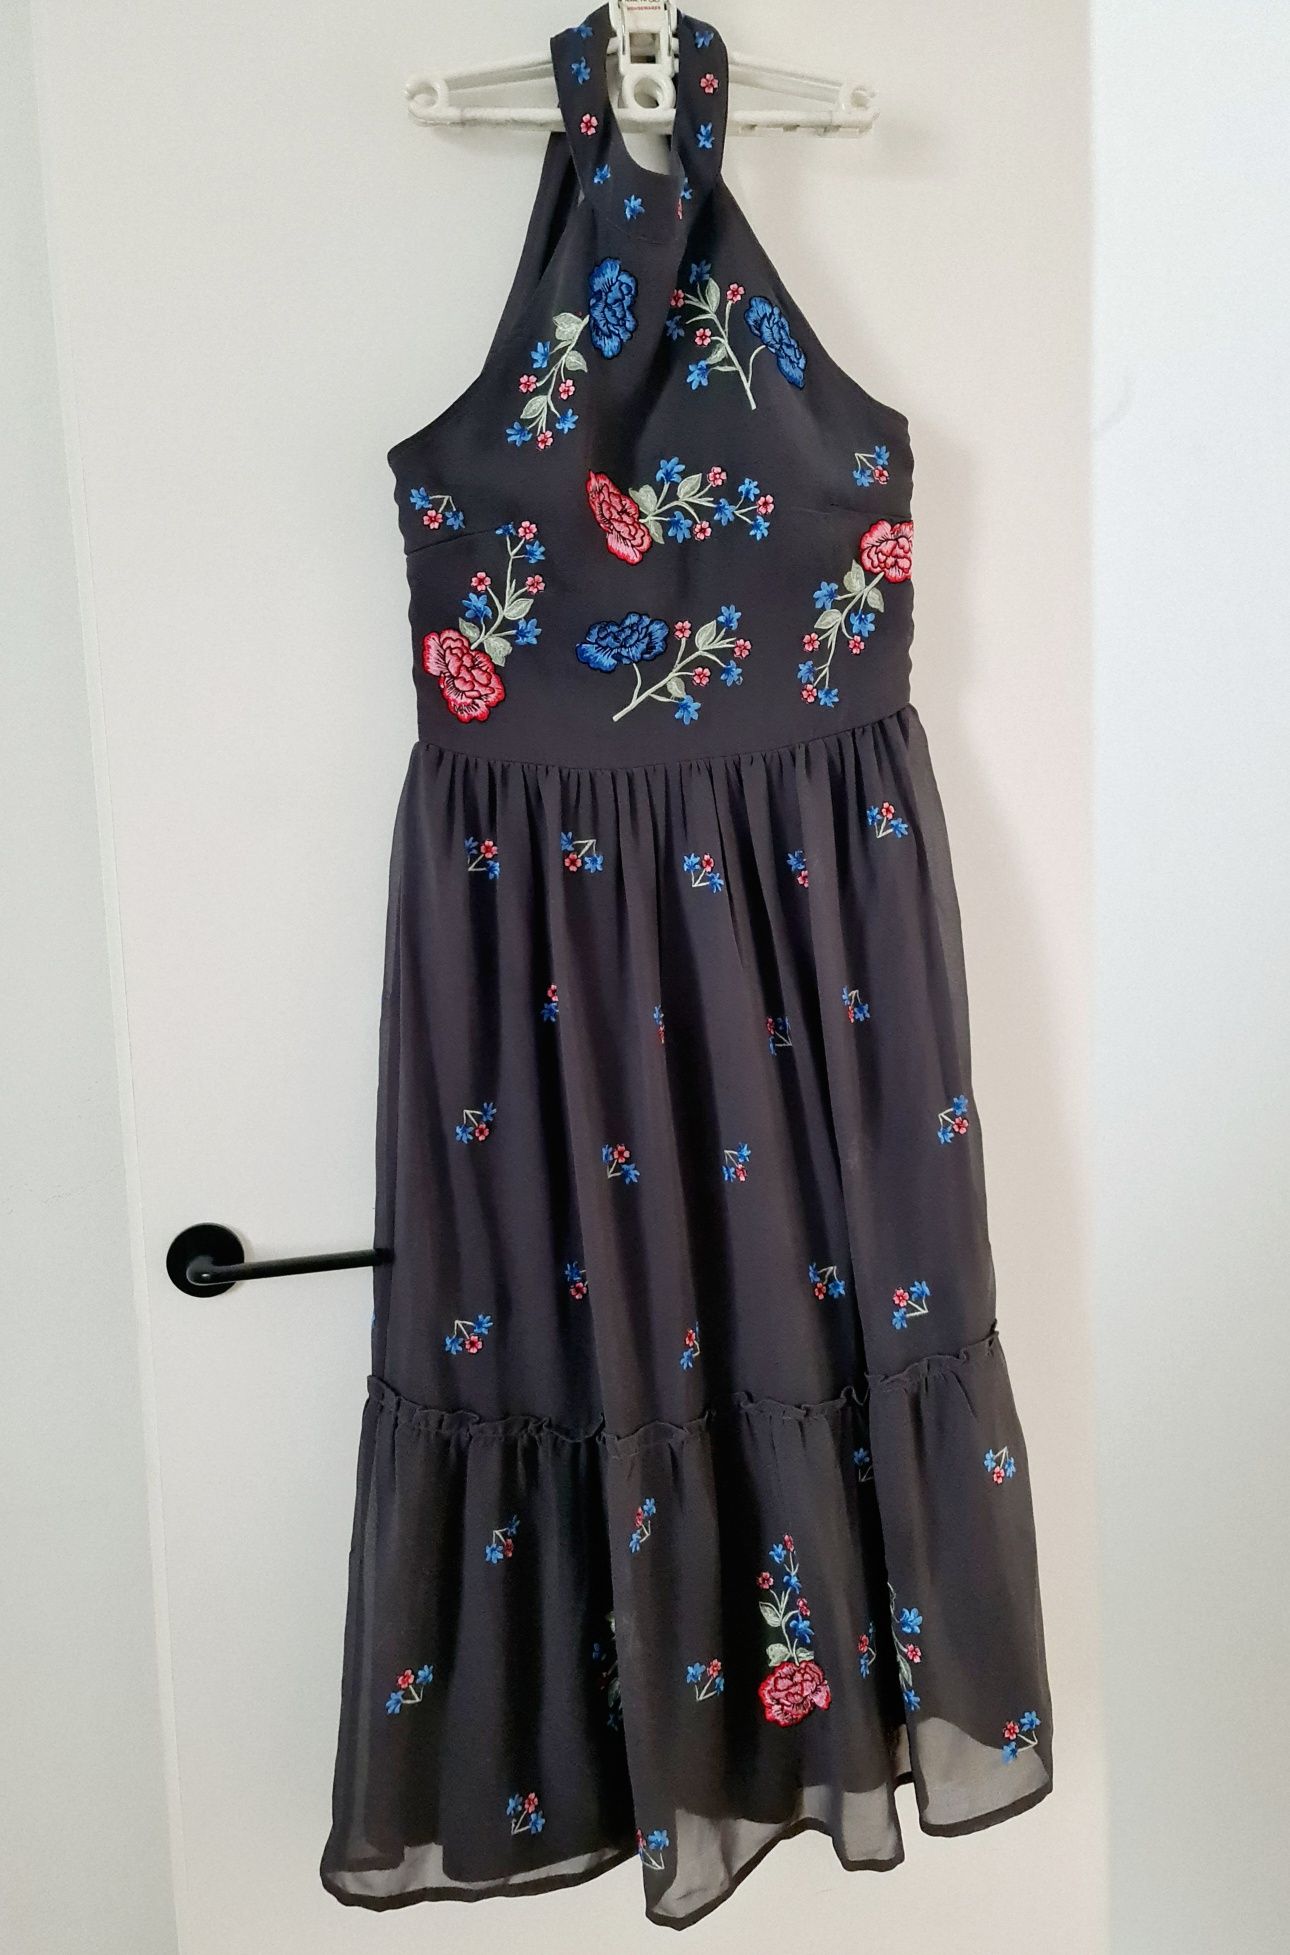 Sukienka marki Lace & Beads rozmiar L / M dekolt halter koronkowa